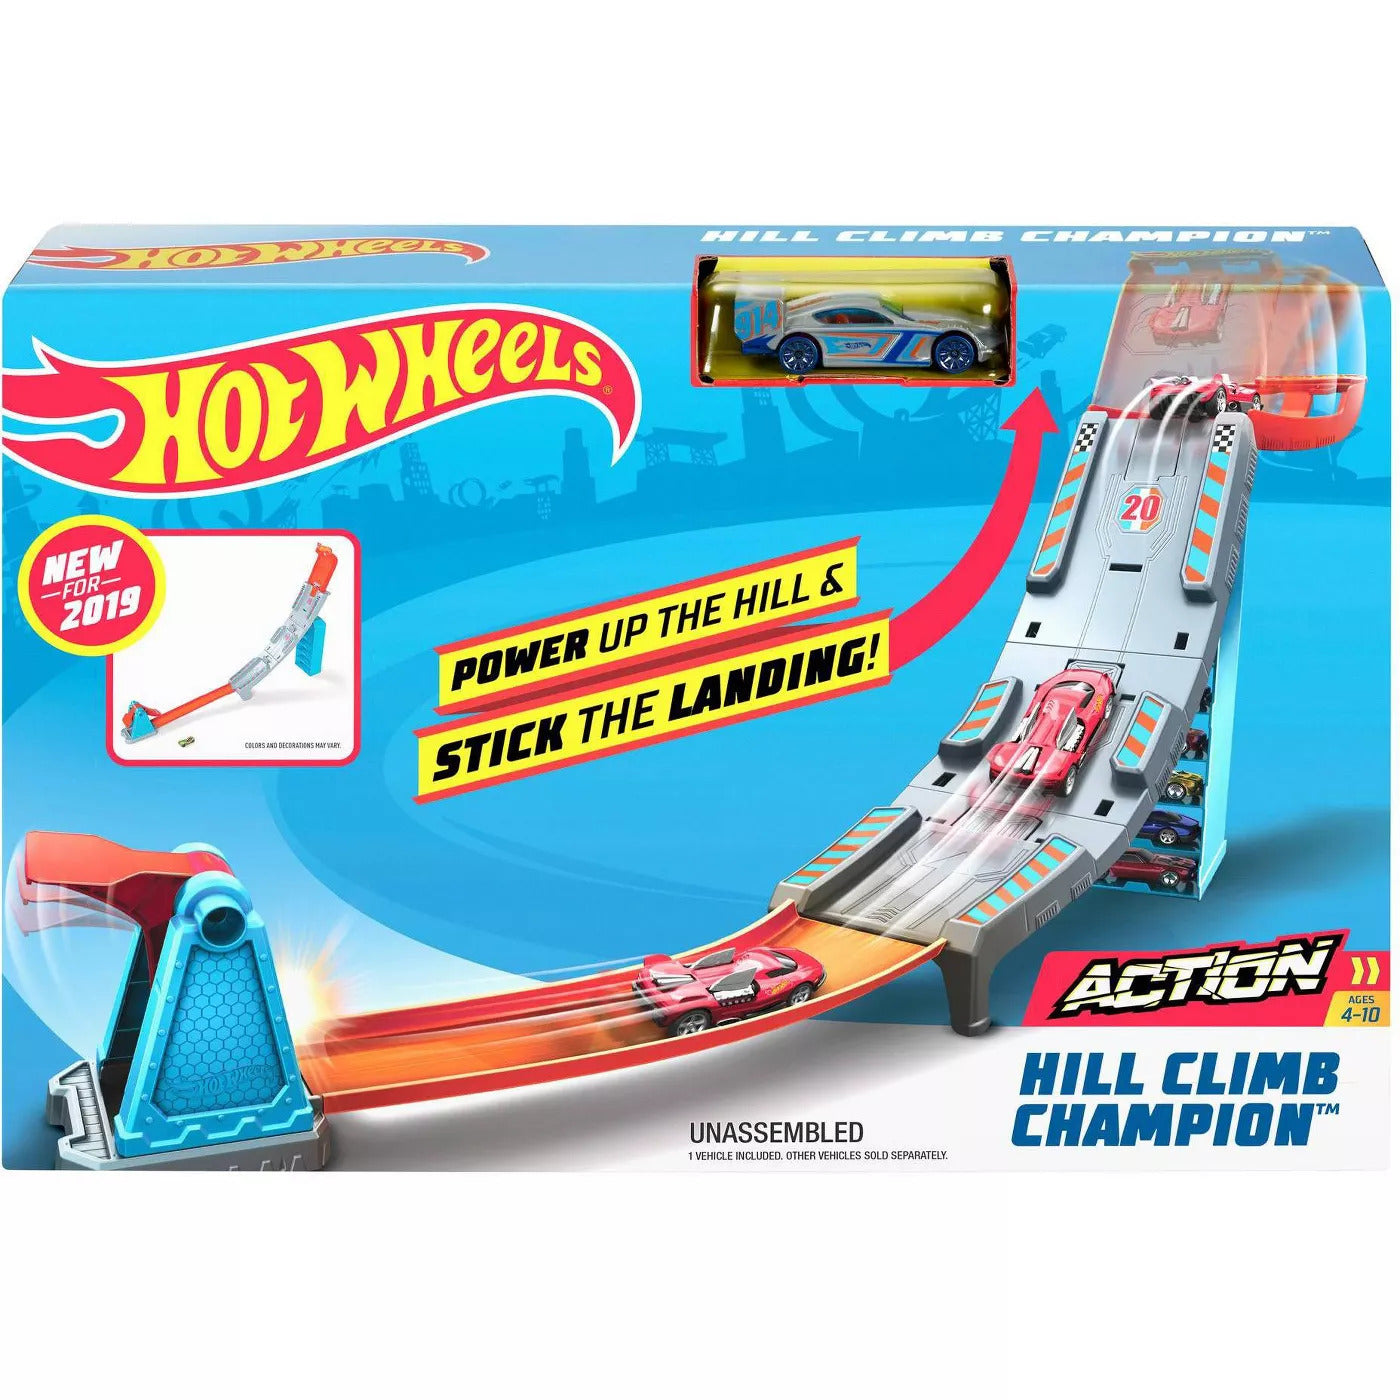 Hot Wheels Action - Hill Climb Champion